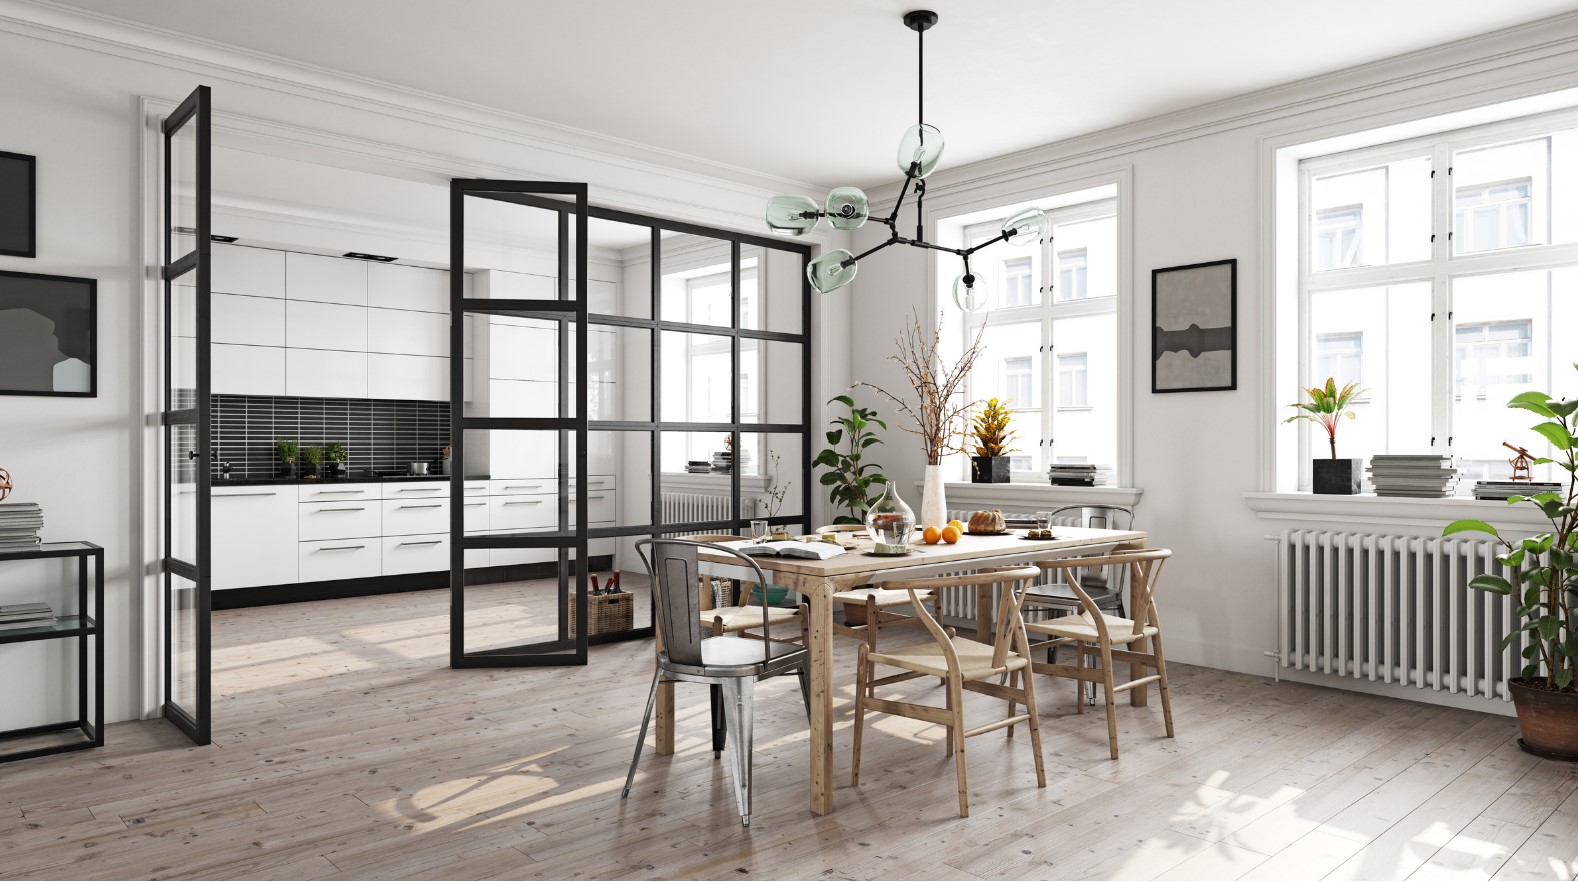 modern kitchen and dining room design, kelleen corsmeier interiors